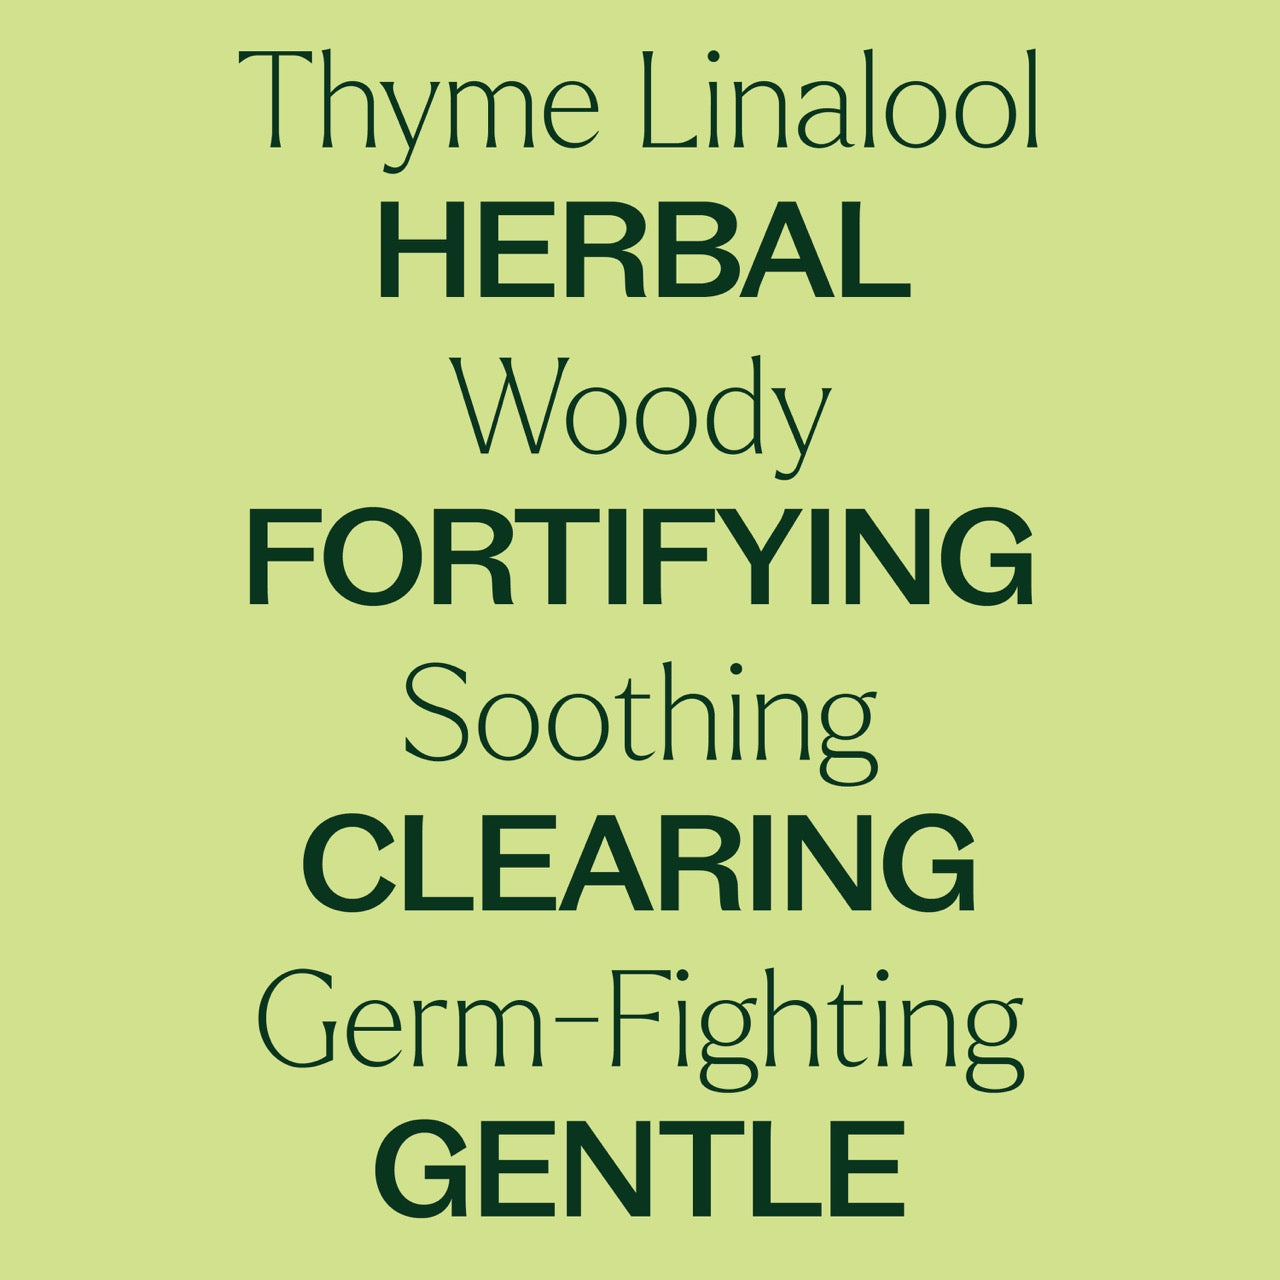 Thyme Linalool Essential Oil key feature: herbal, woody, fortifying, soothing, clearing, germ-fighting, gentle